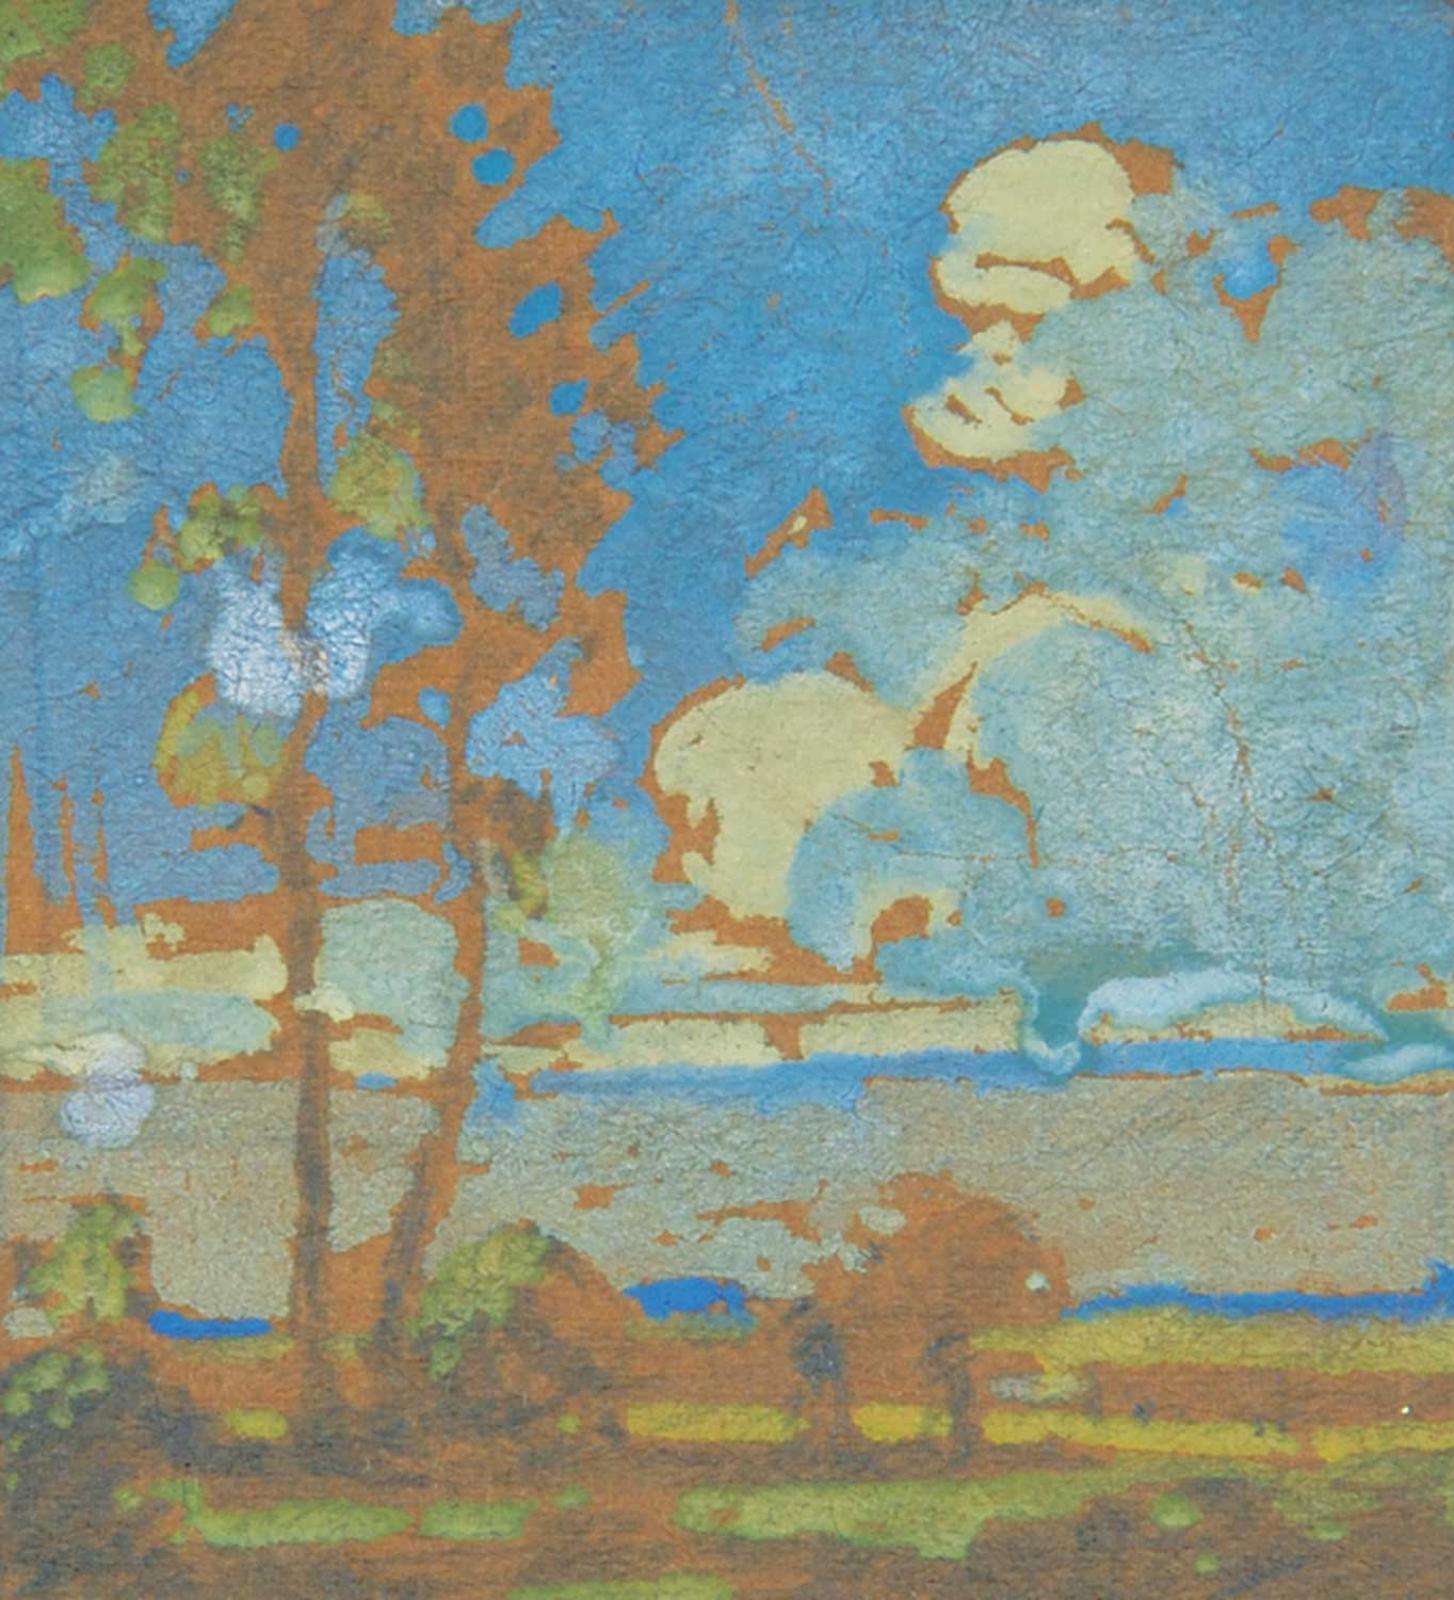 Lionel Lemoine FitzGerald (1890-1956) - Untitled - Sunset